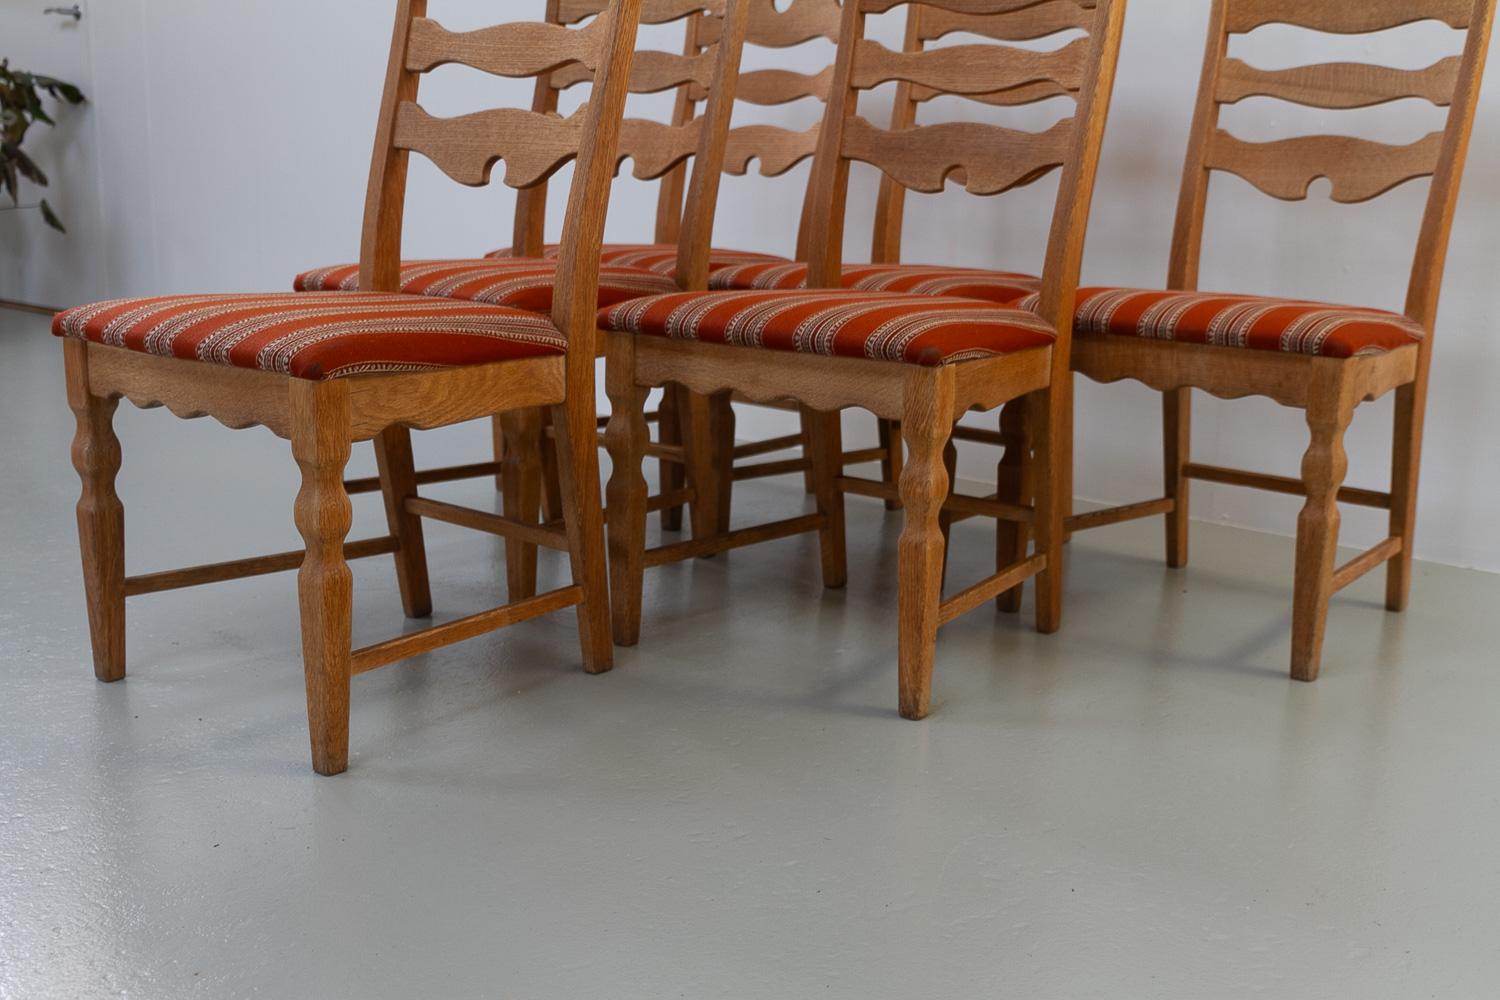 Mid-20th Century Danish Modern Highback Razorblade Oak Chairs by Kjærnulf, 1960s. Set of 6. For Sale